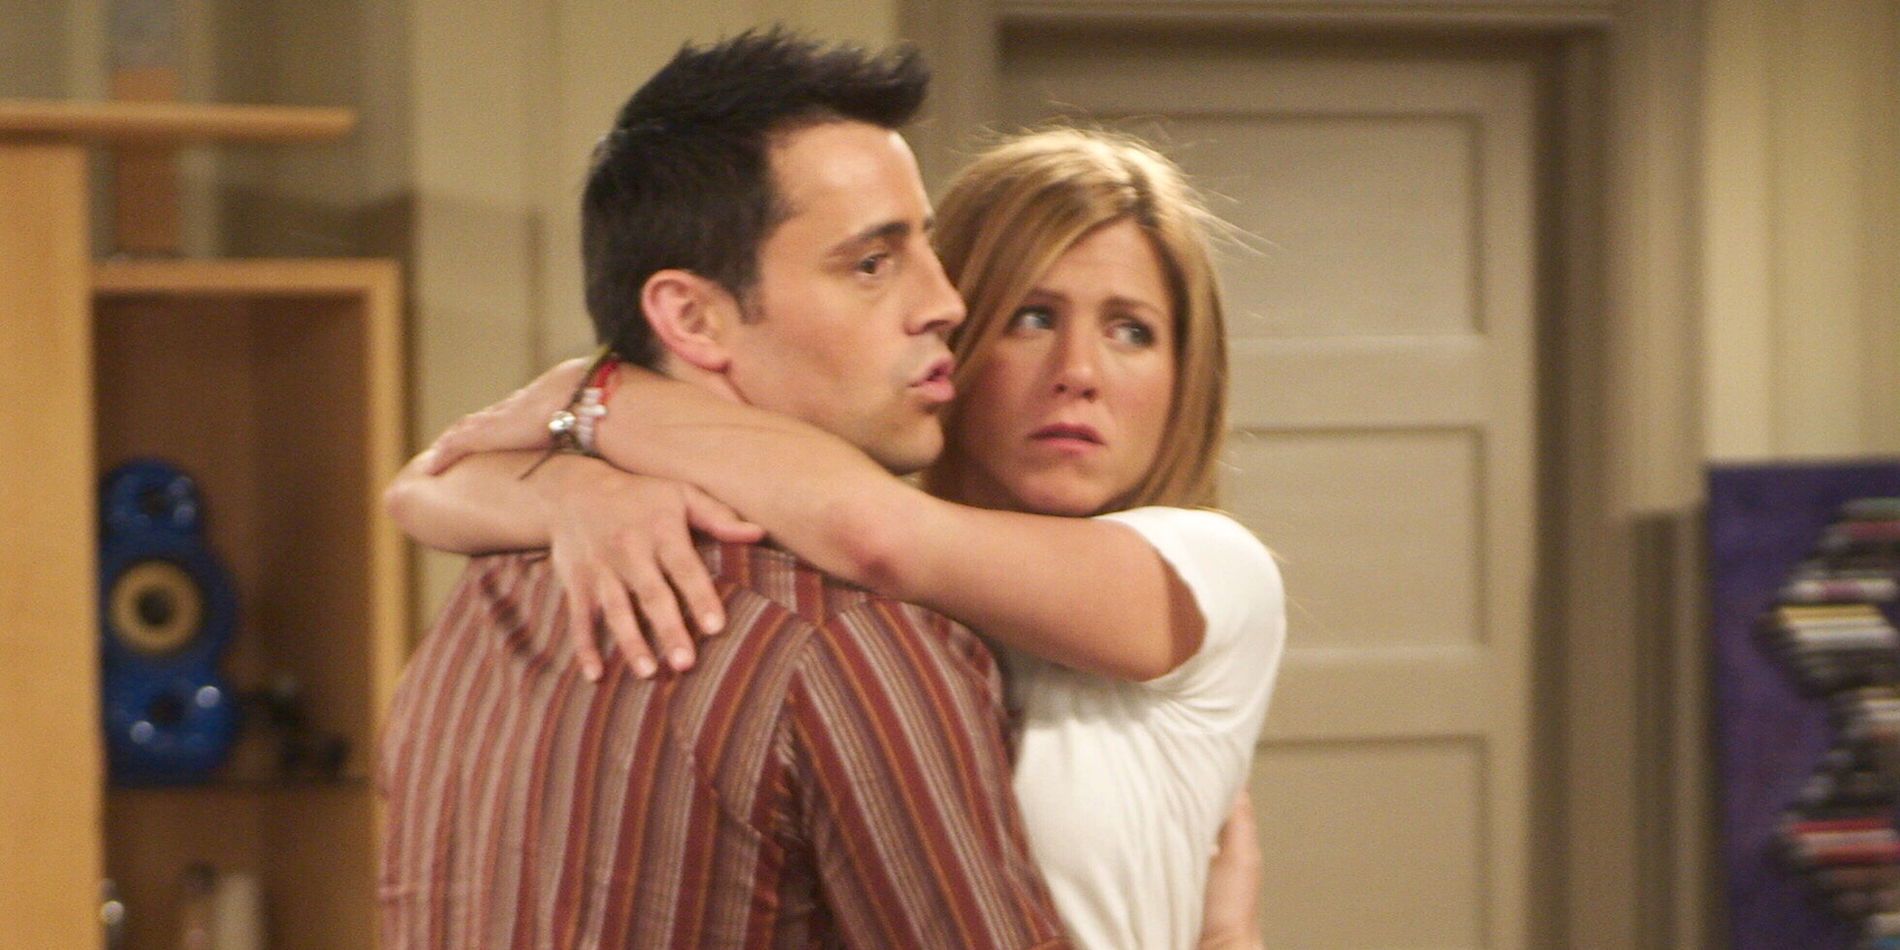 Joey and Rachel hugging on Friends